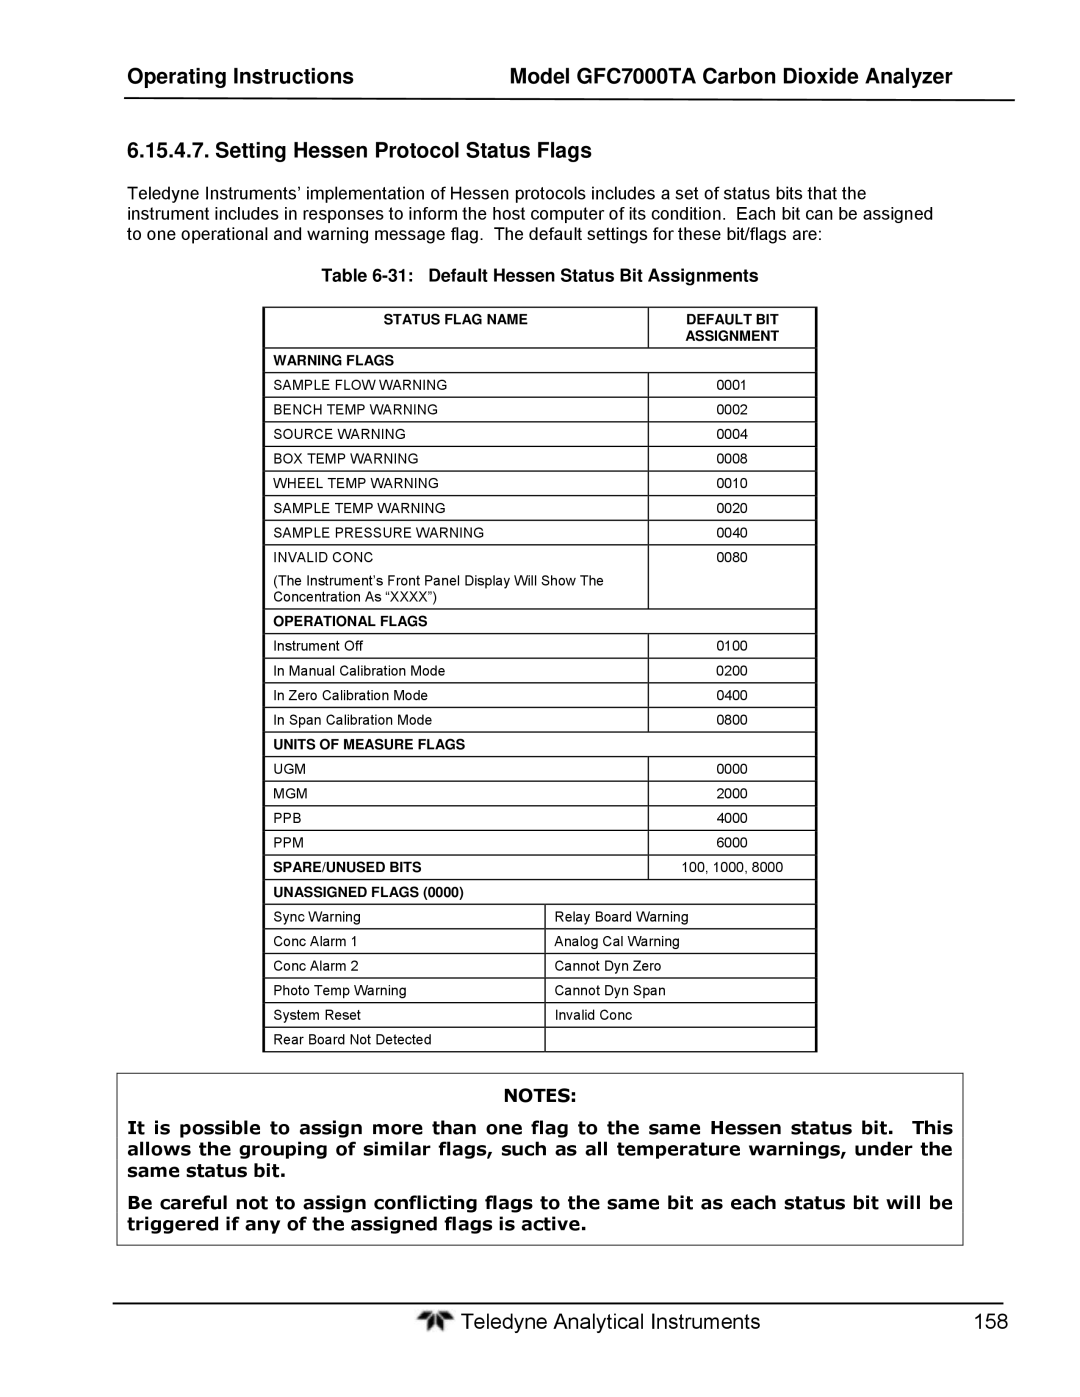 Teledyne gfc 7000ta operation manual Default Hessen Status Bit Assignments, Status Flag Name Default BIT Assignment 